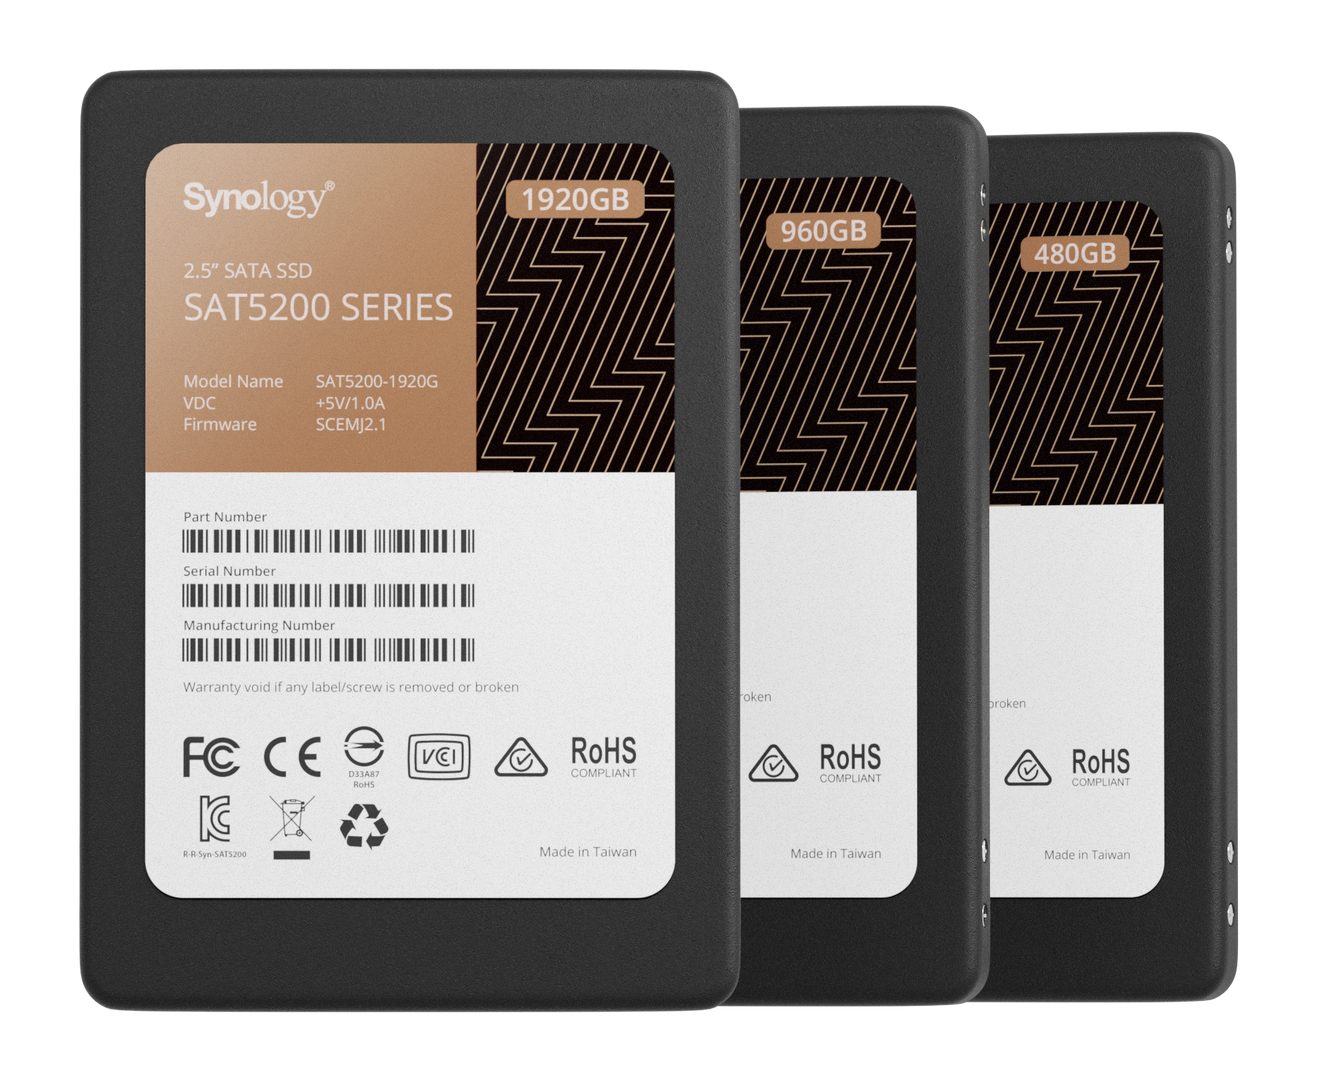 Synology เปิดตัวกลุ่มผลิตภัณฑ์ SSD ใหม่ ที่มีประสิทธิภาพสูงและเชื่อถือได้